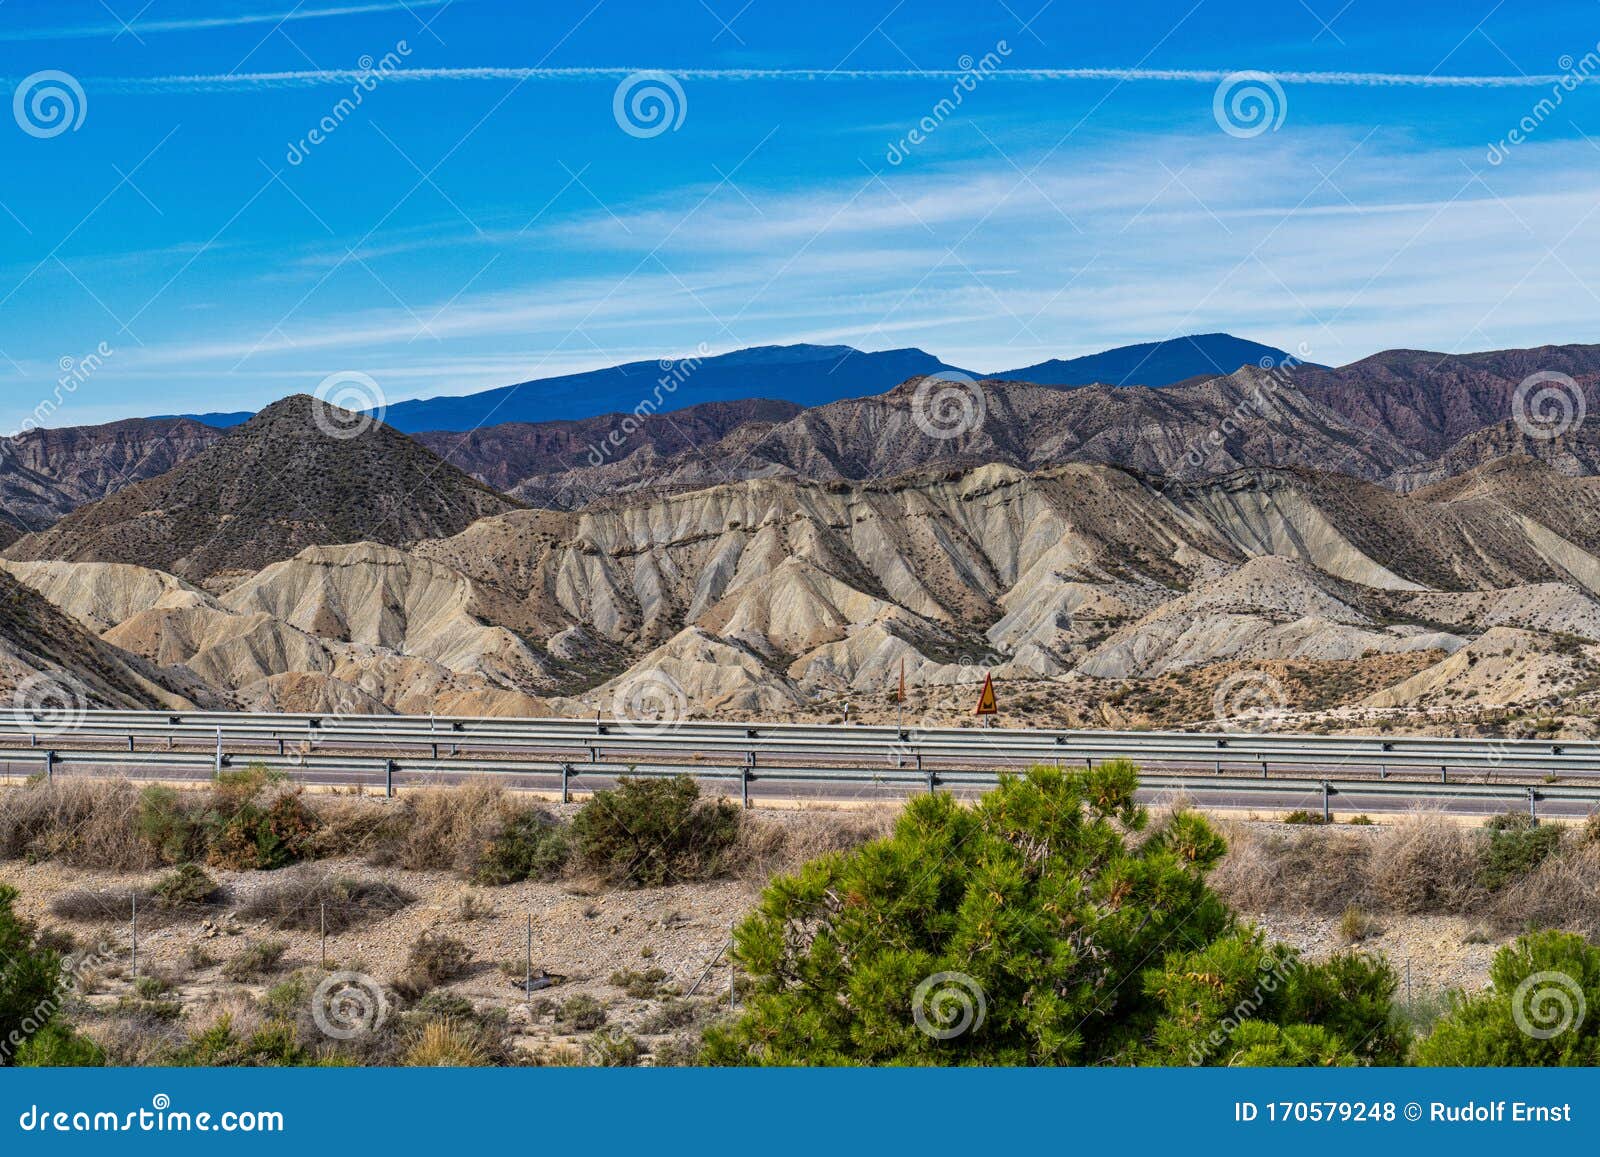 tabernas desert, desierto de tabernas near almeria, andalusia region, spain